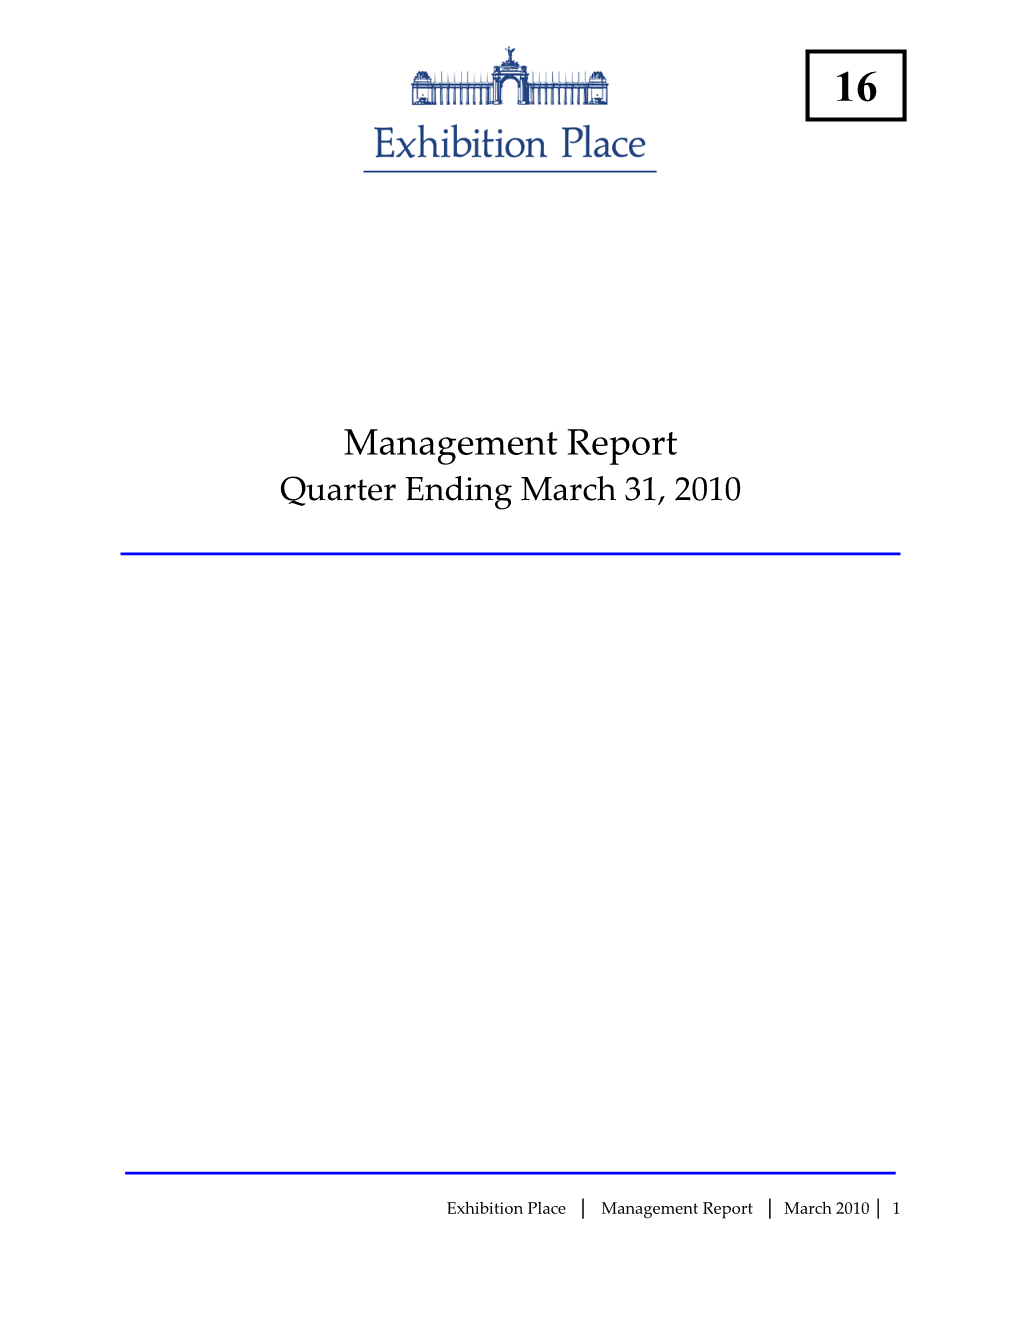 EP Management Report